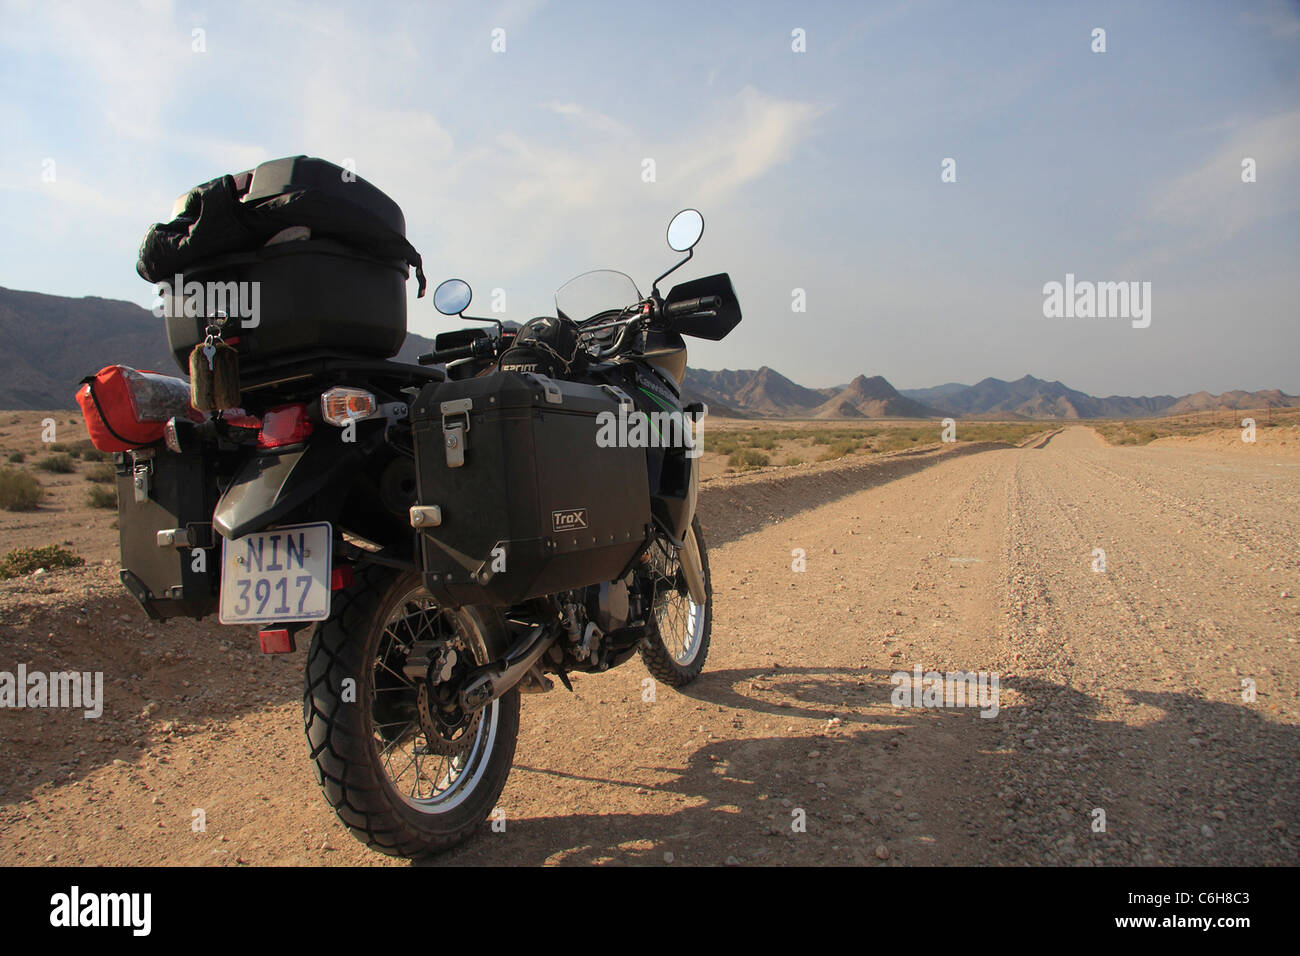 Touring bike on a sand road in arid desert area Stock Photo